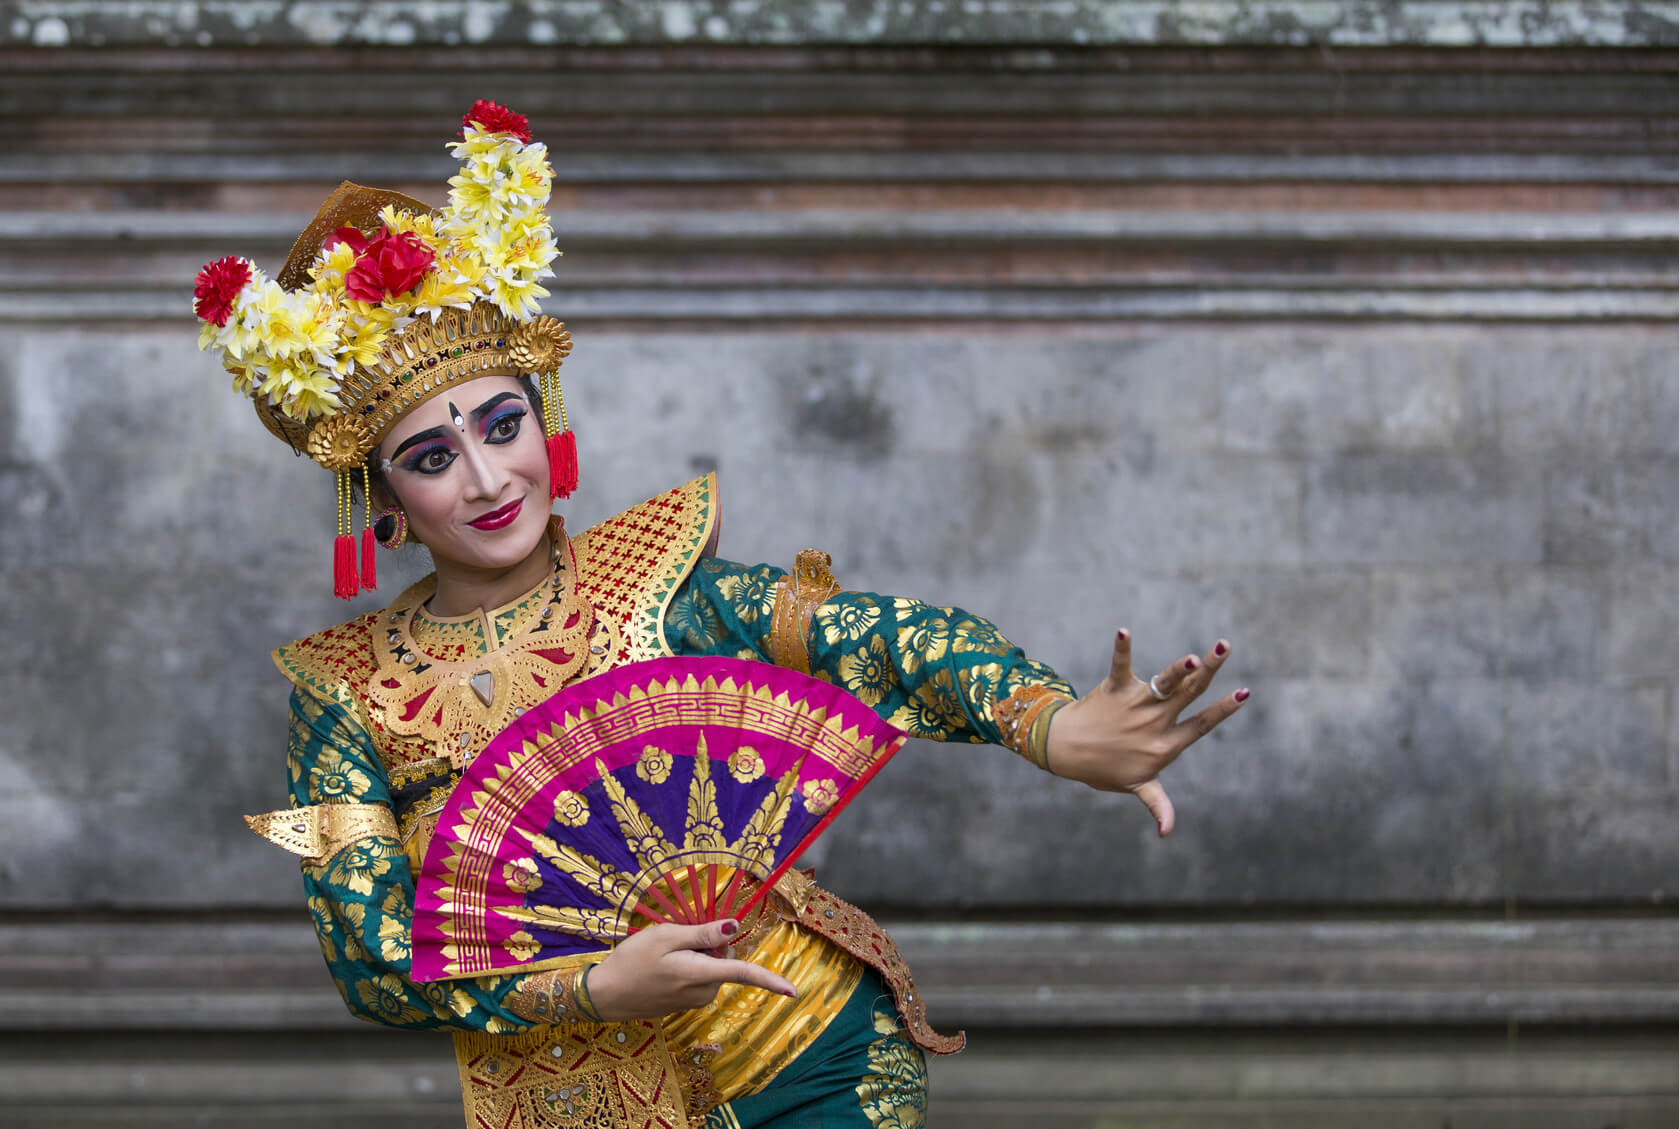 Balinese Dancer in Indonesia